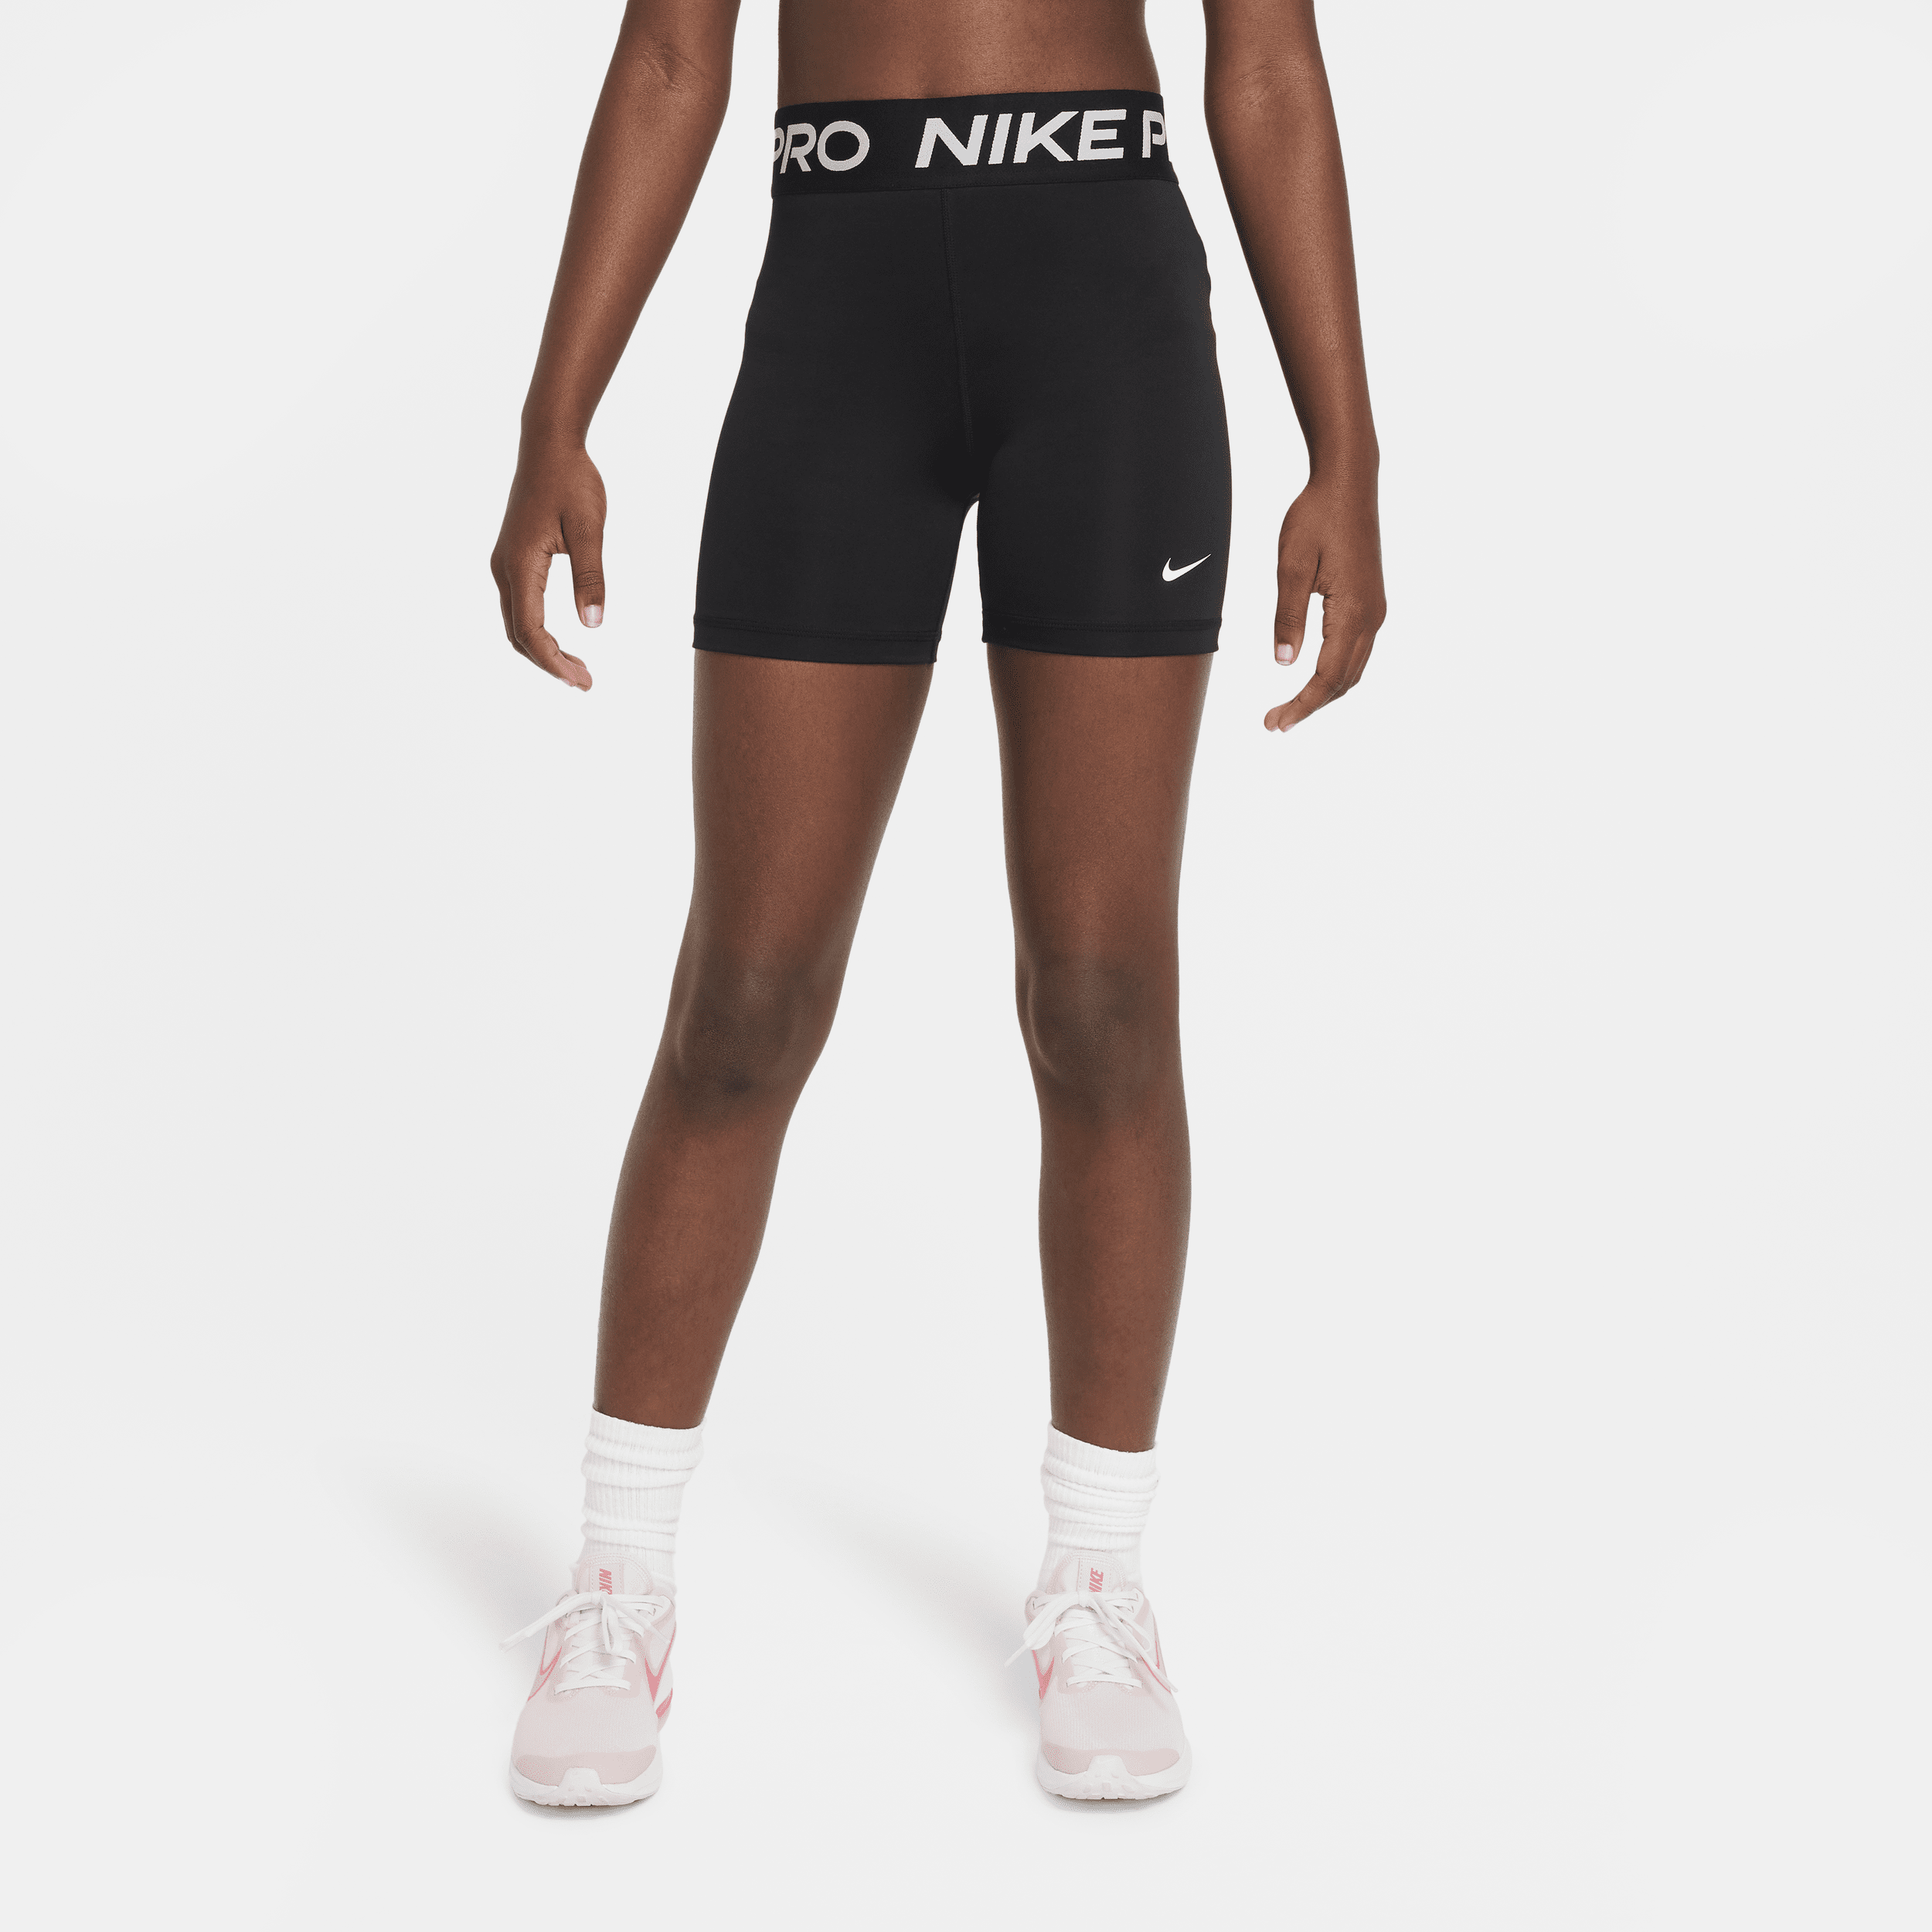 Shorts Nike Pro - Ragazza - Nero